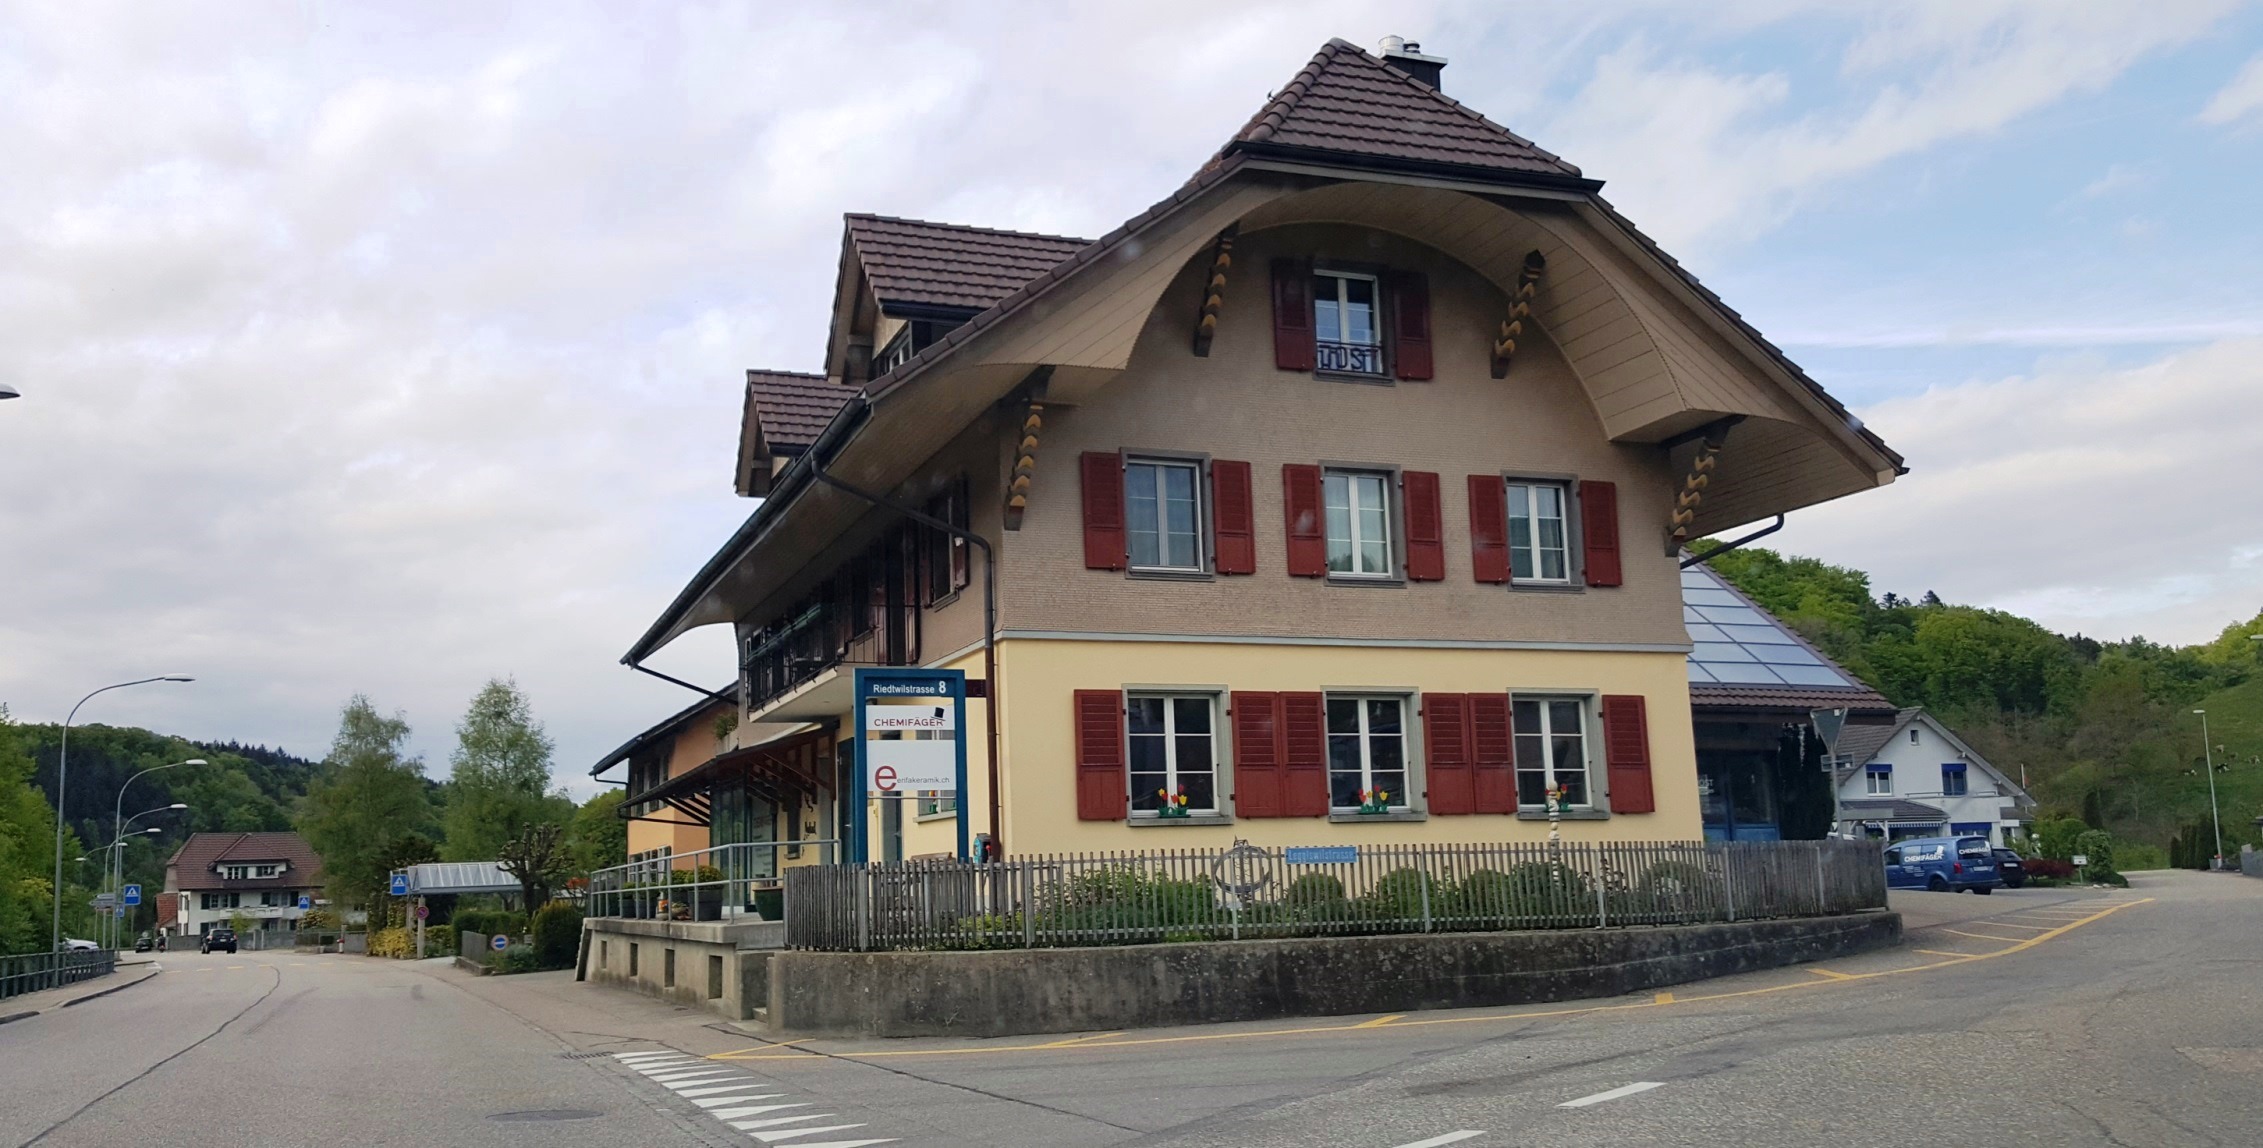 Swiss houses